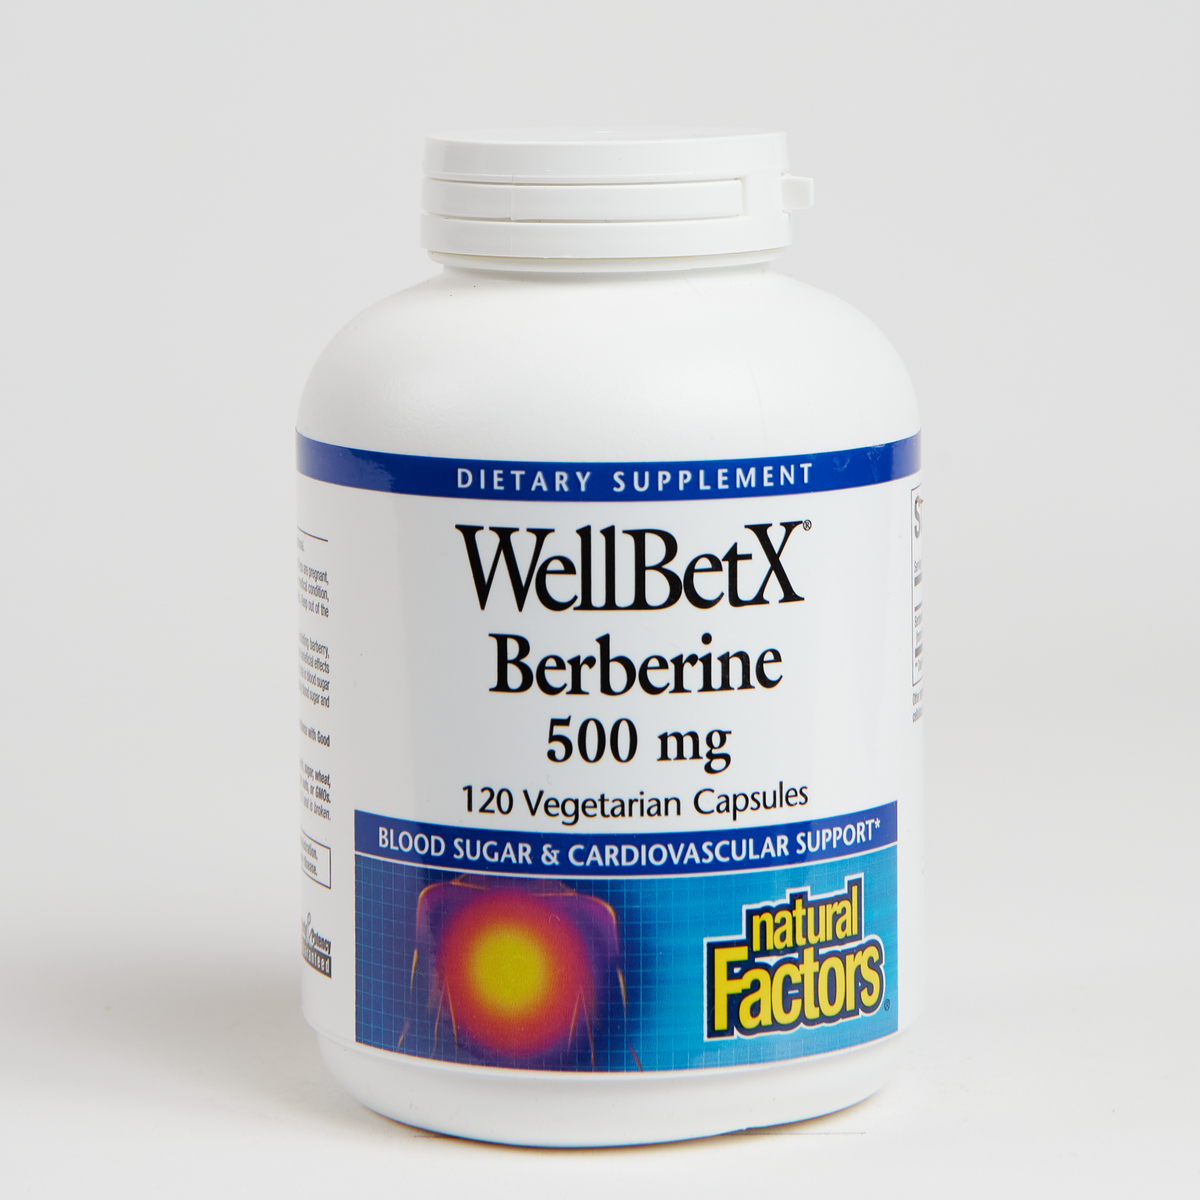 Natural Factors Wellbetx Berberine 500 mg - 120 Count